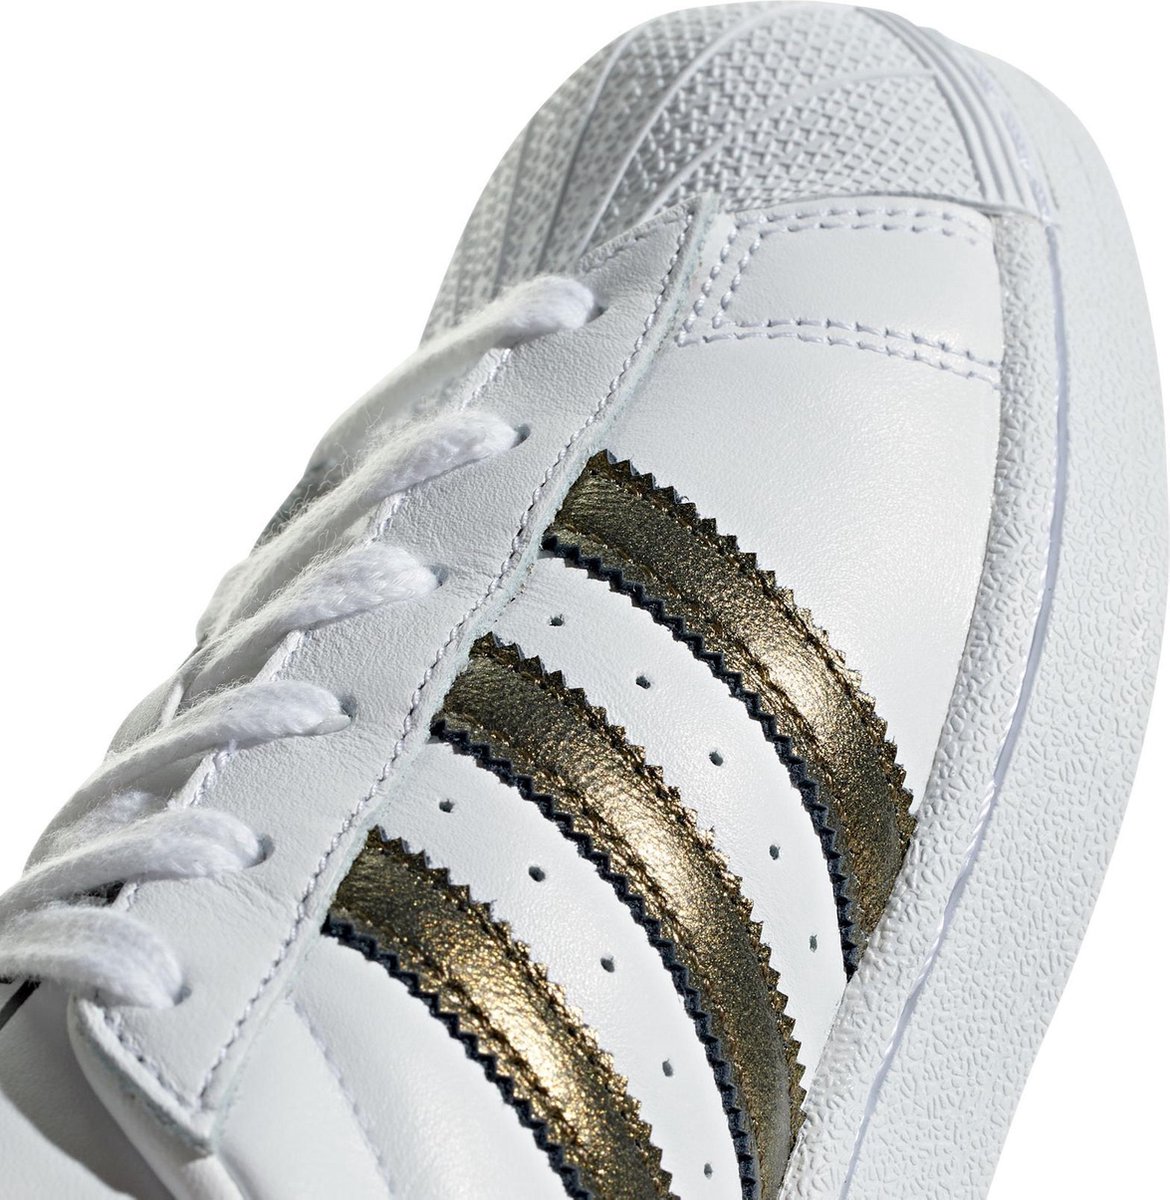 adidas Superstar Sneakers - Maat 38 - Vrouwen - wit/goud | bol.com